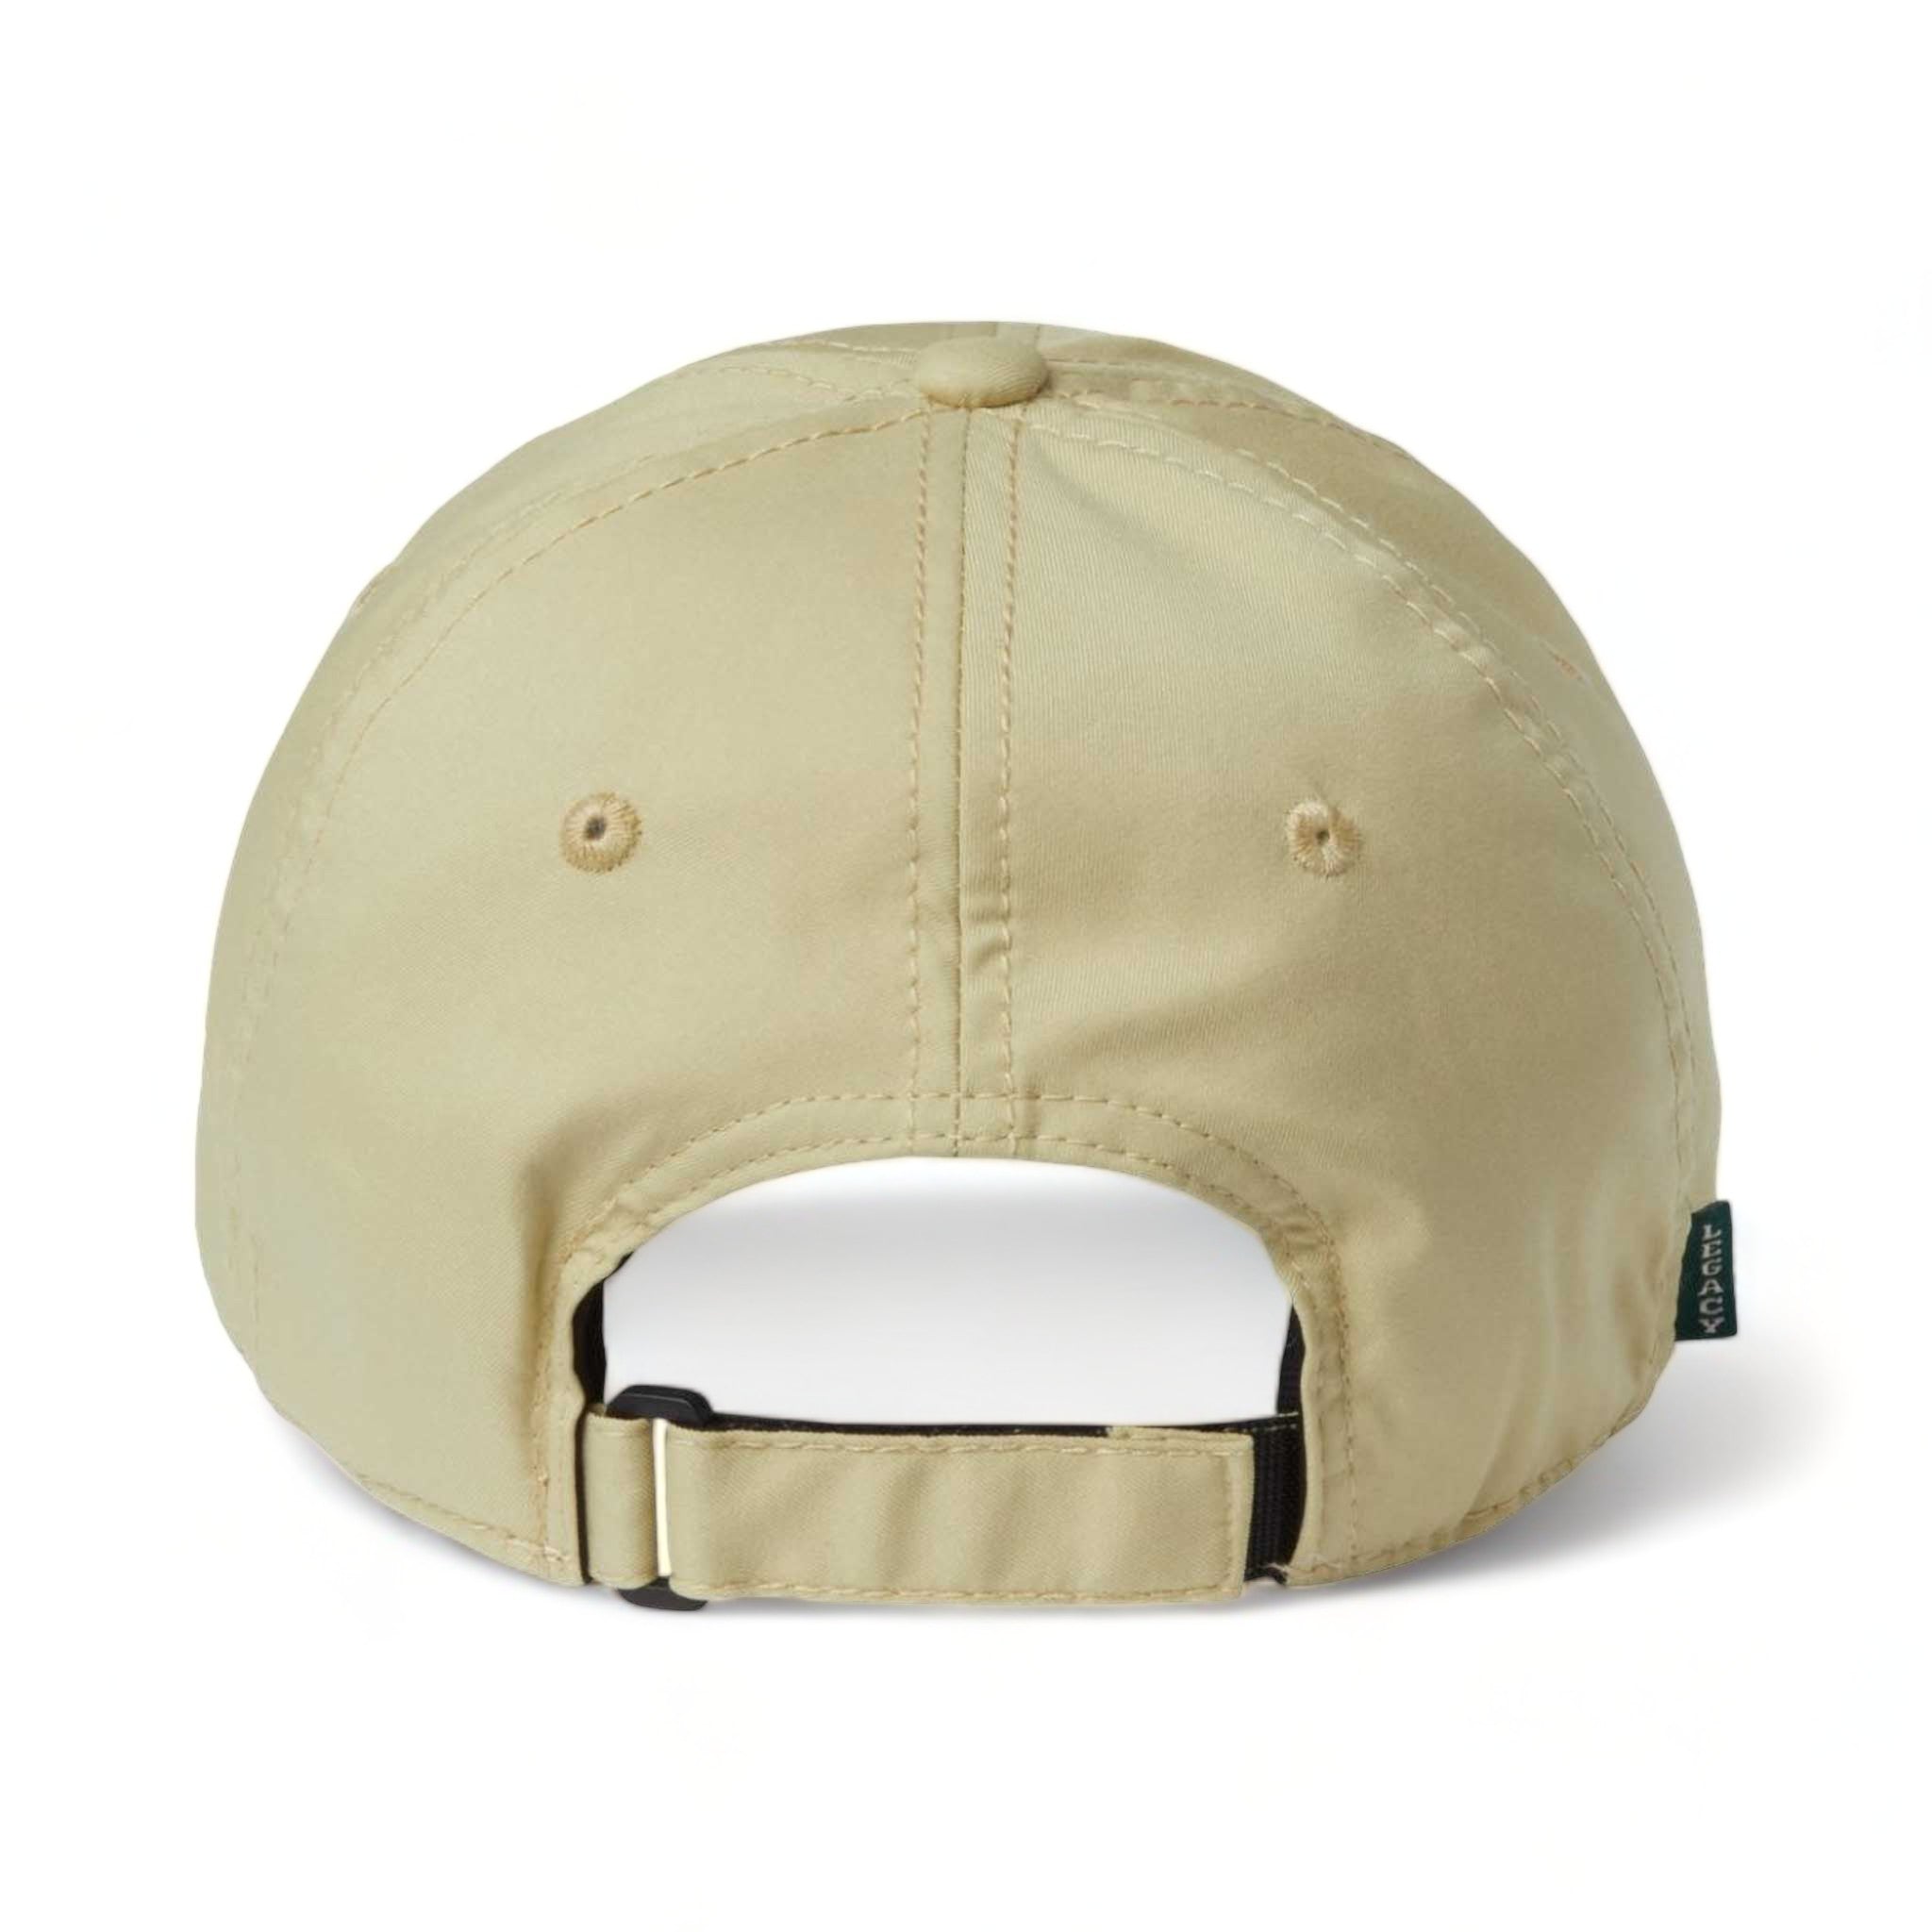 Back view of LEGACY CFA custom hat in vegas gold